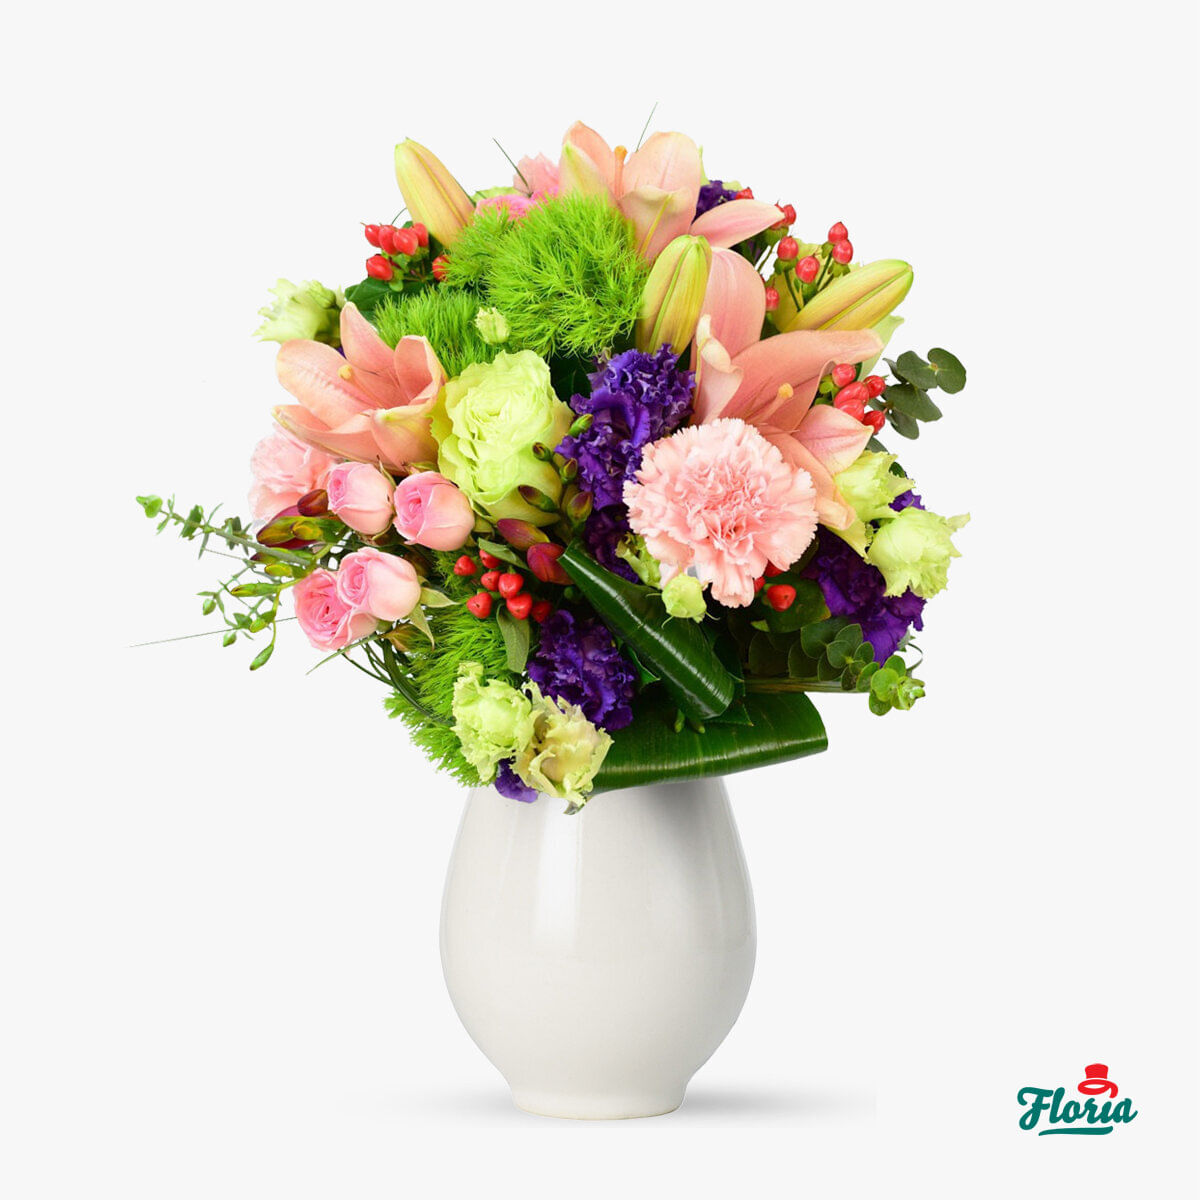 Buchet de flori – Darul florilor – premium Buchet